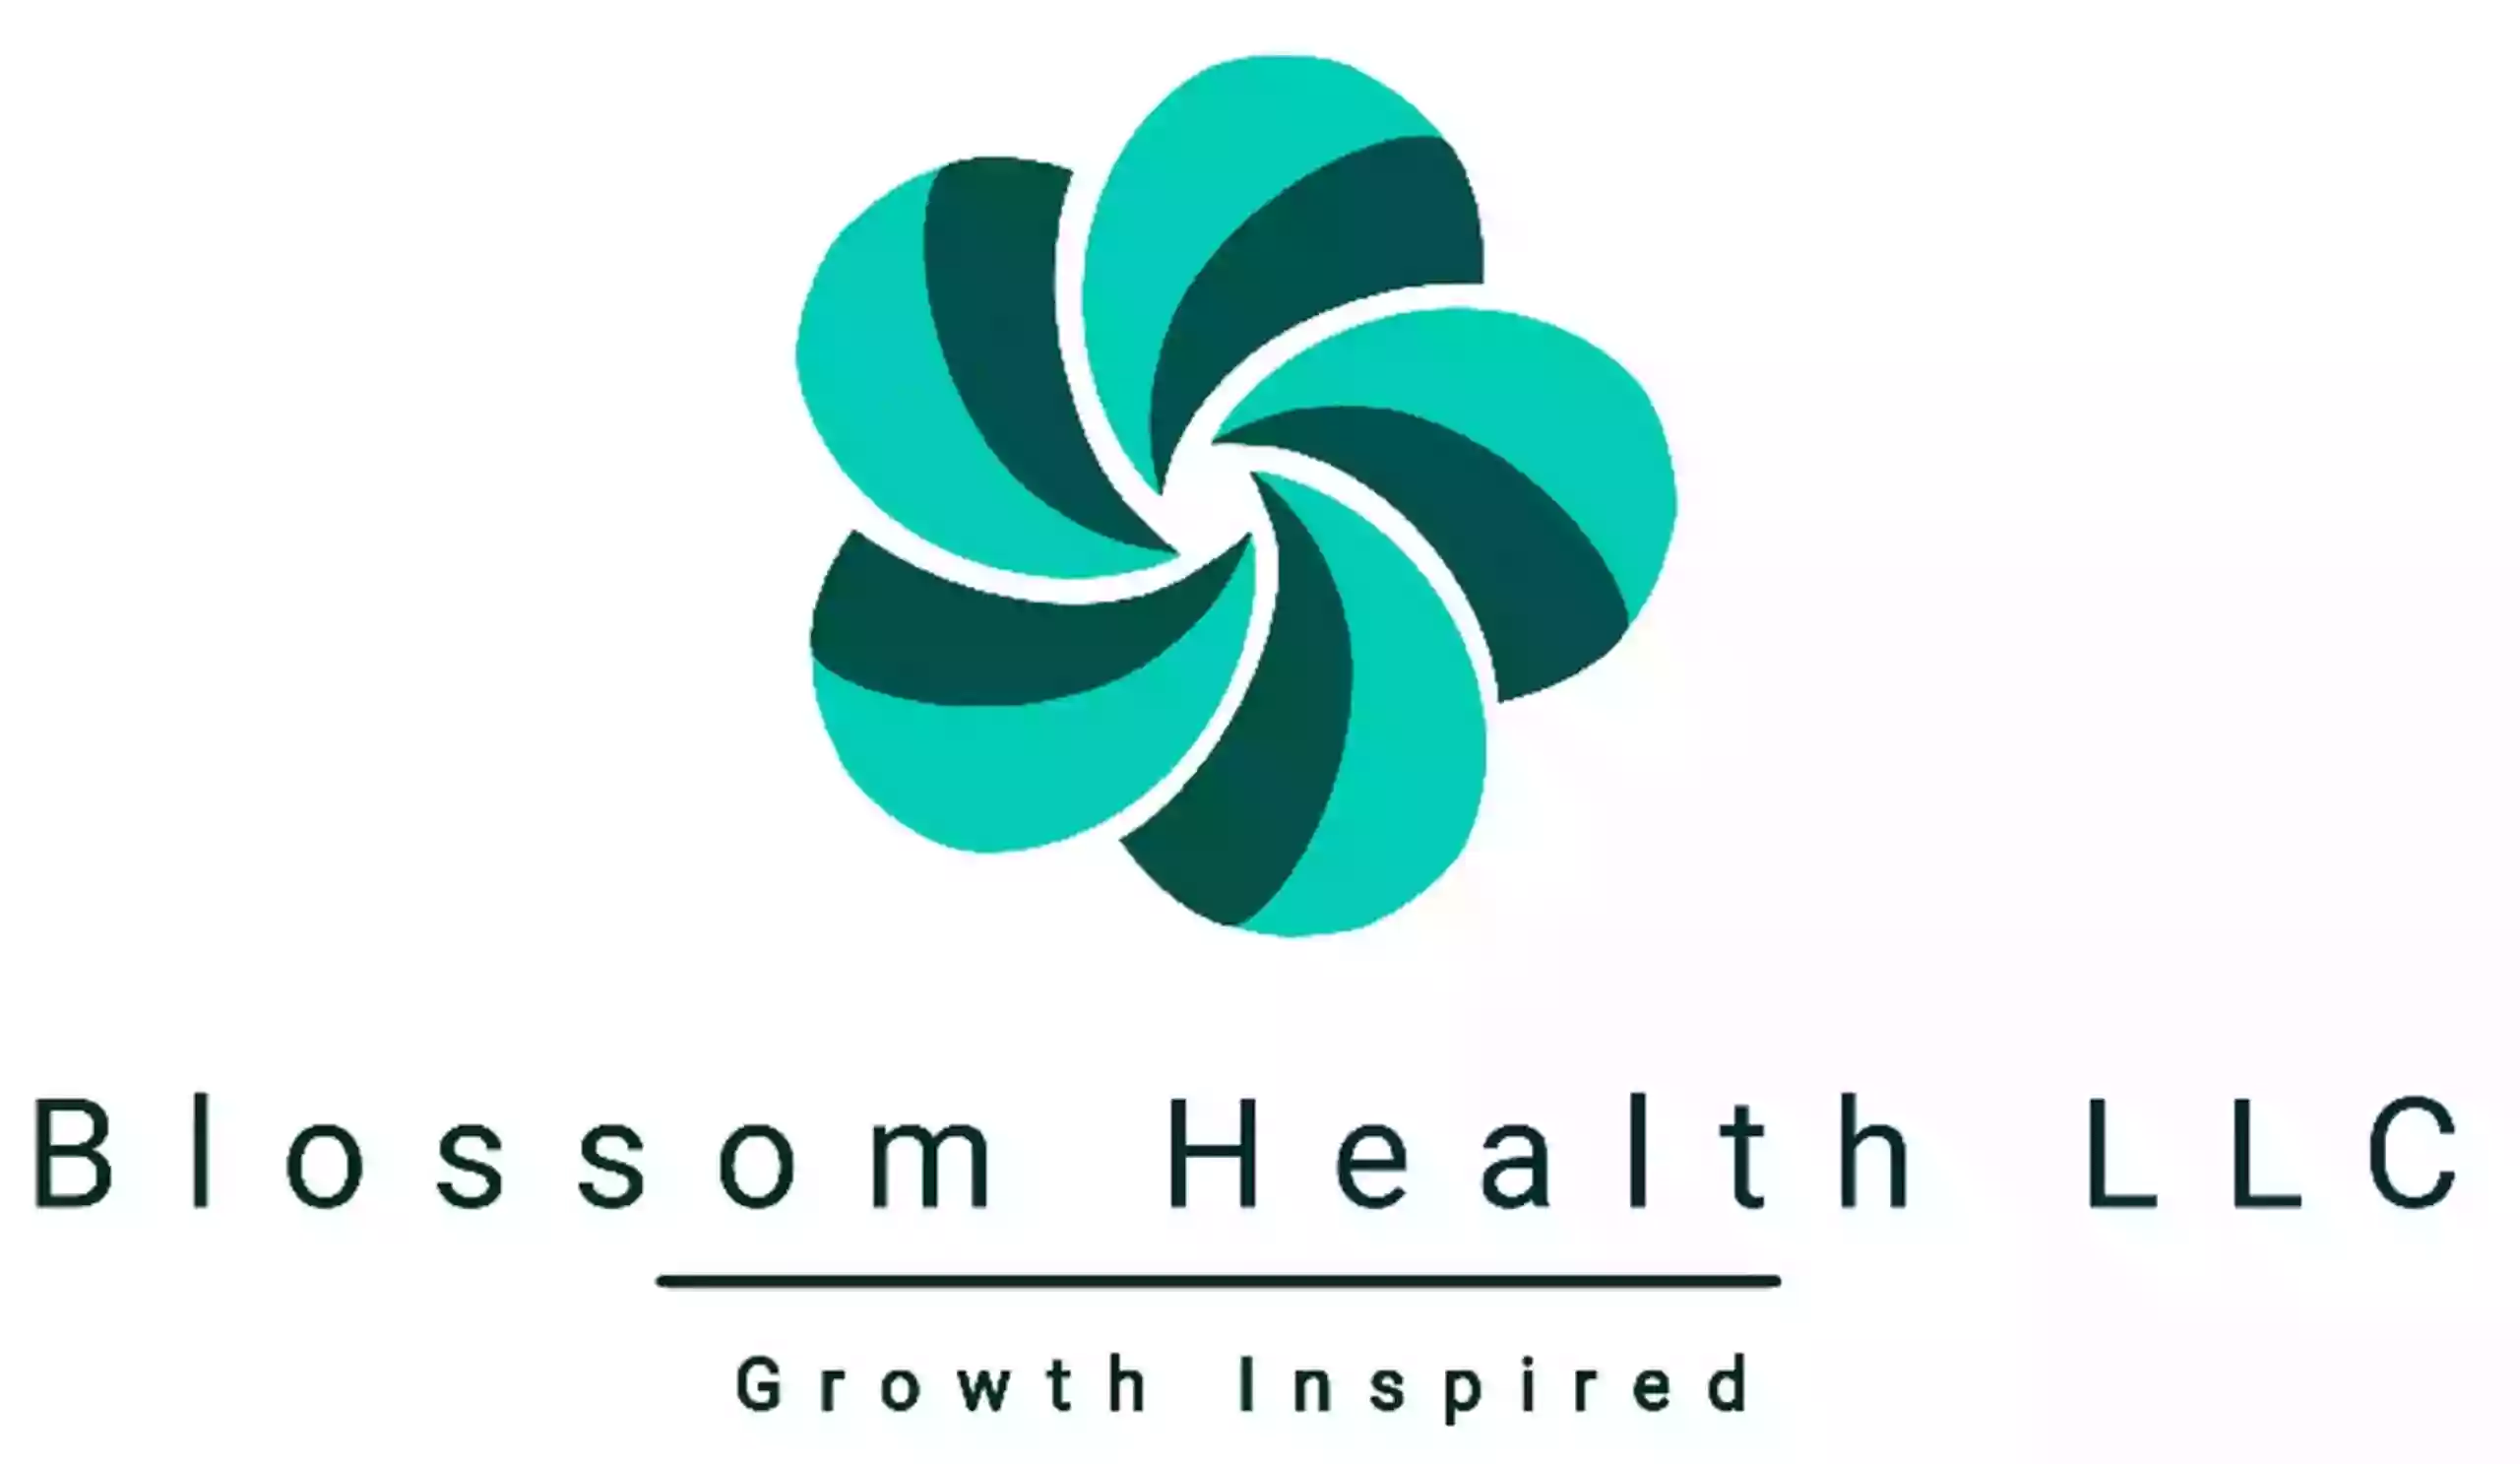 Blossom Health LLC